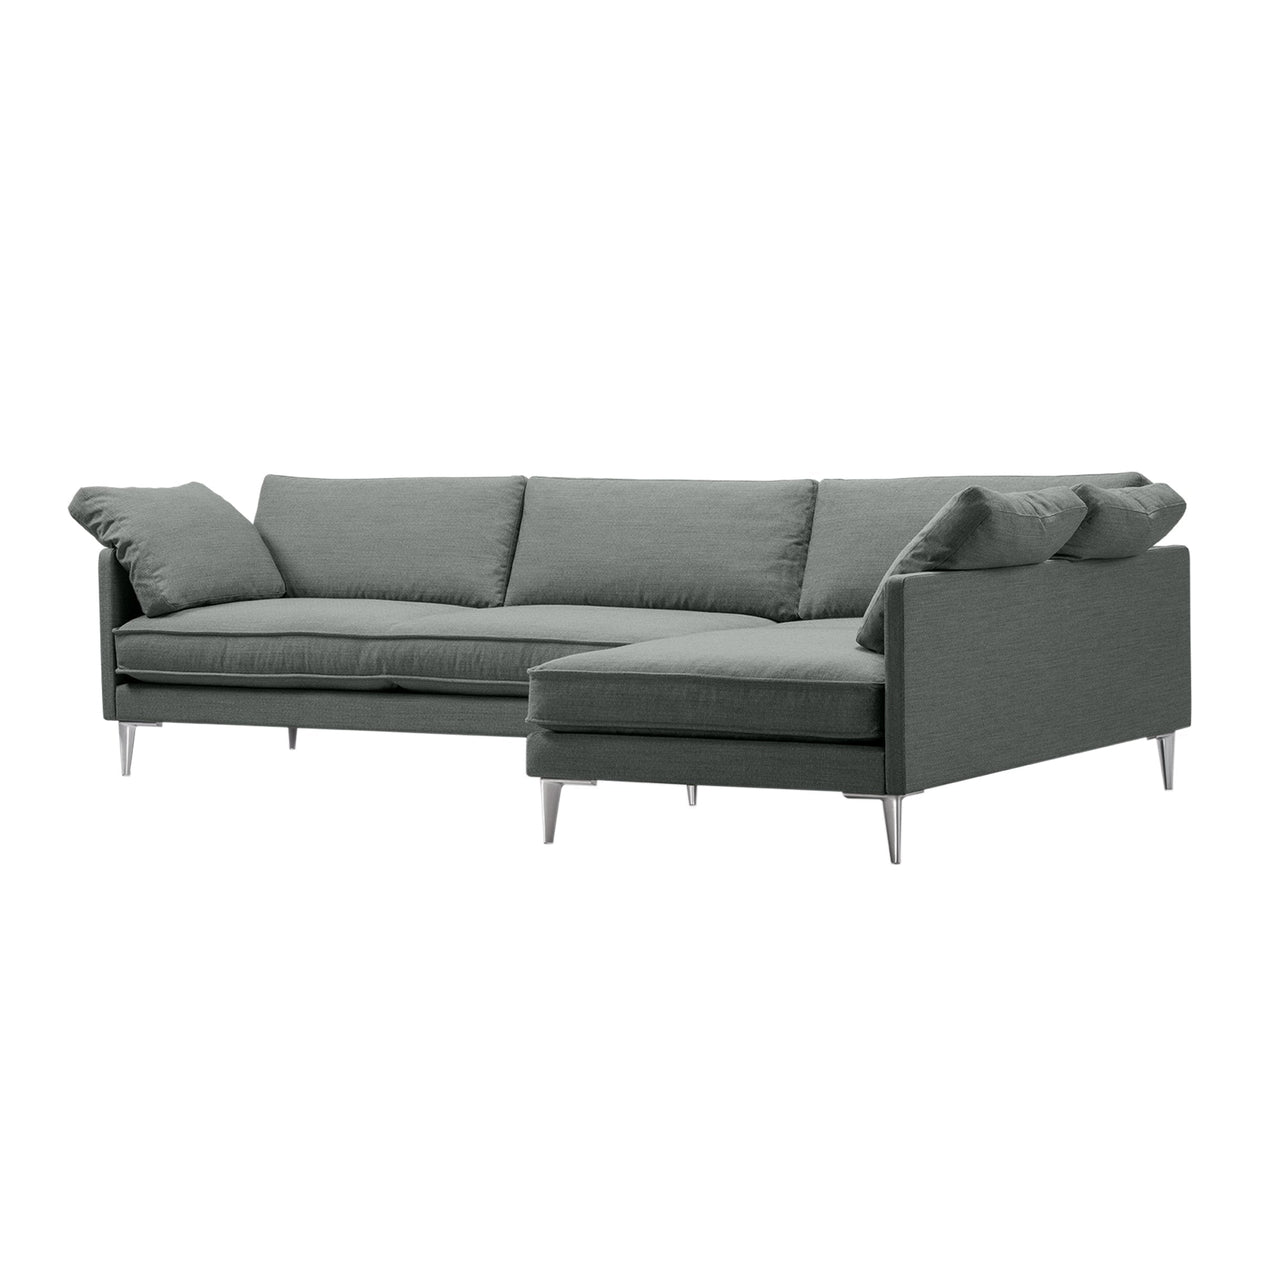 EJ295 Chaise Sofa: Small + Chrome + Right  (With Cushion)